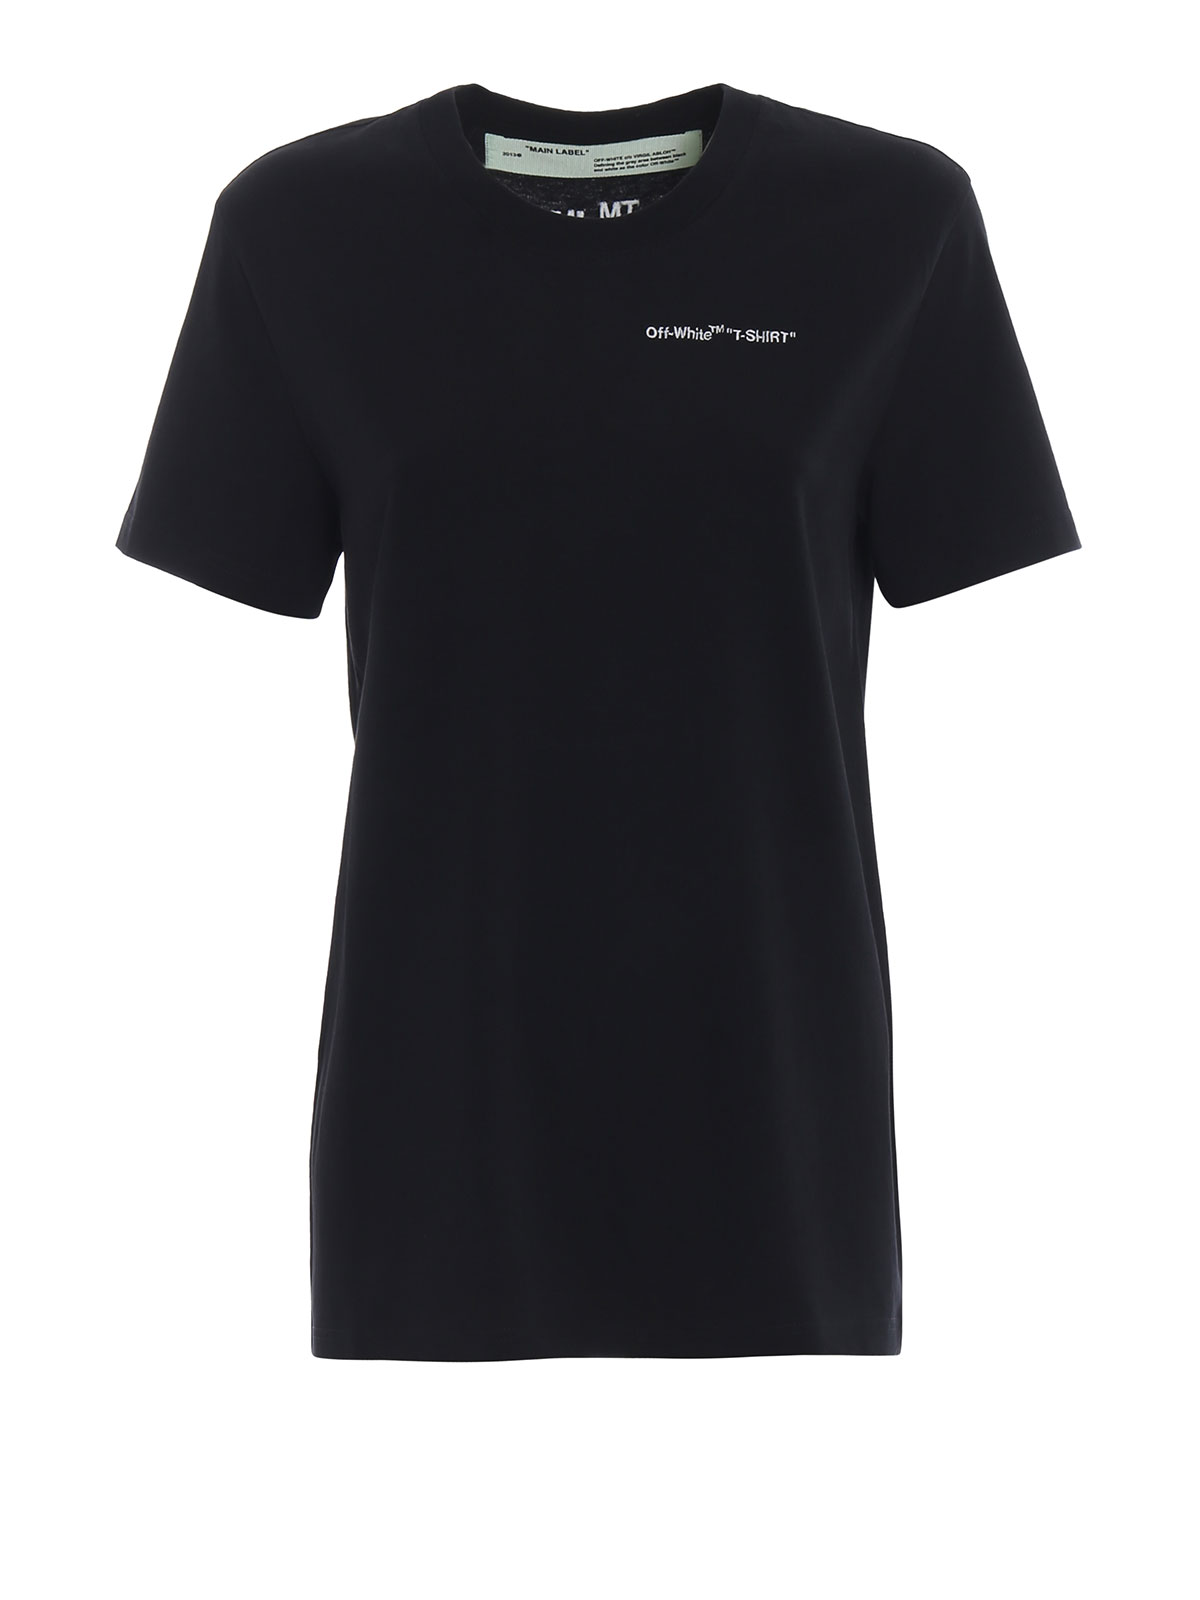 Tシャツ Off-White - Tシャツ - 黒 - OWAA049E18B070341001 | iKRIX.com